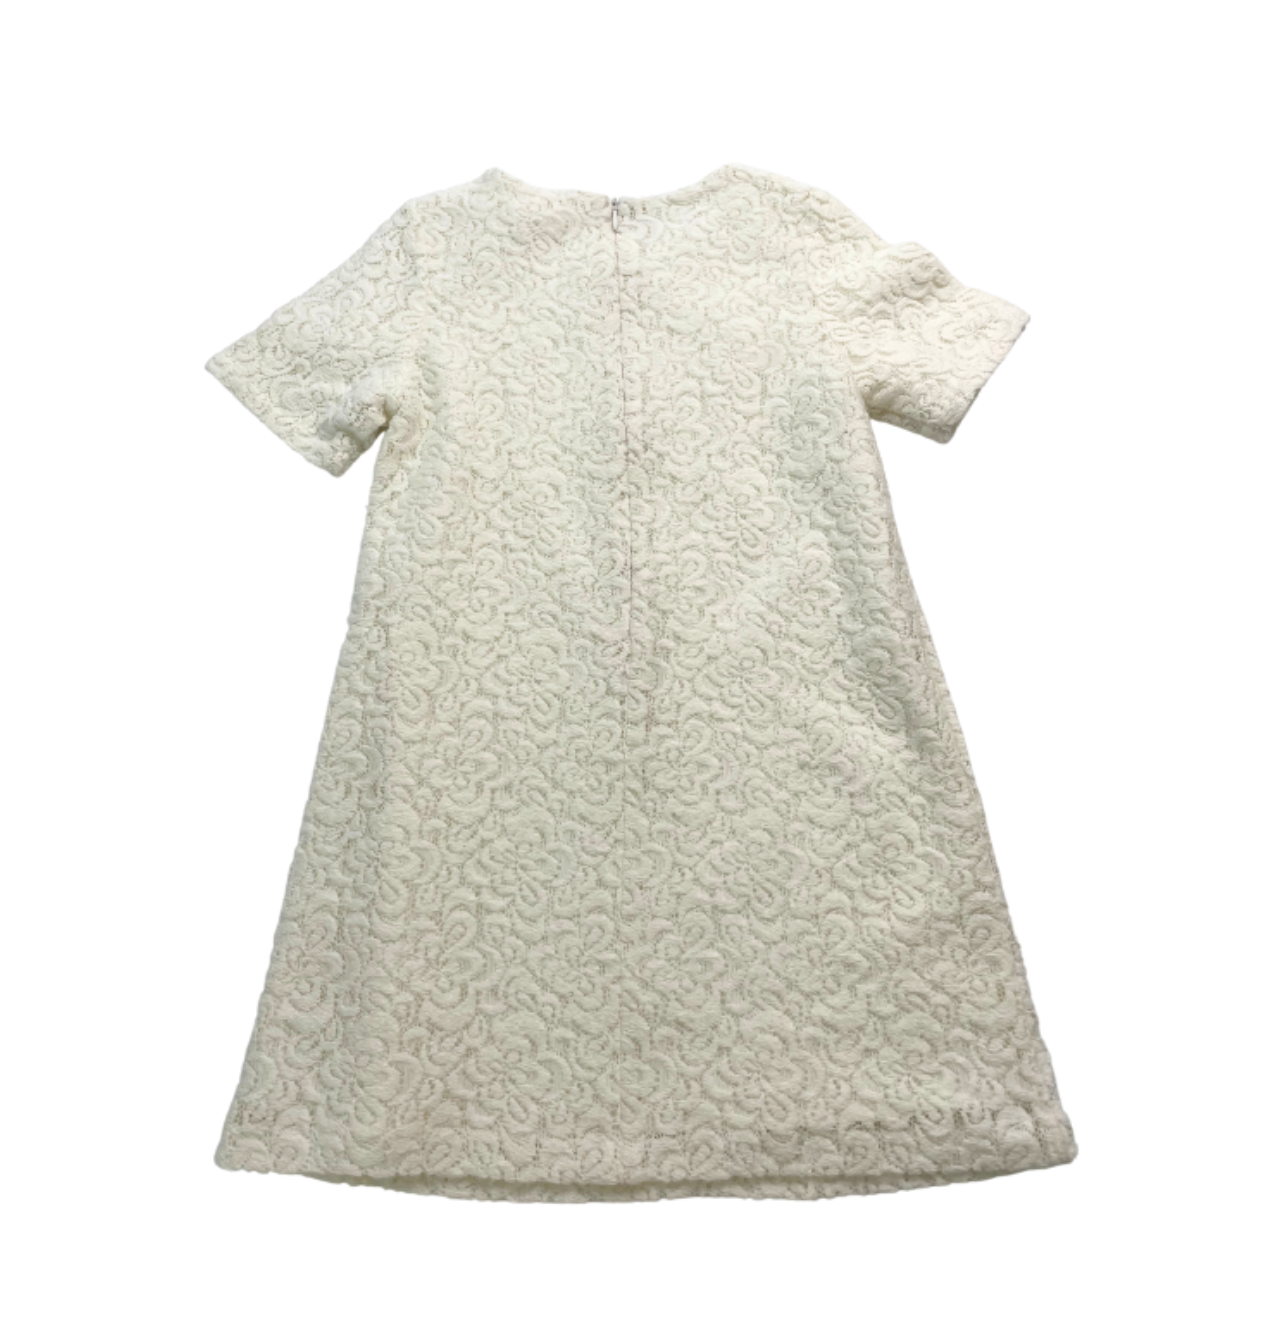 CHLOE - Robe blanche en dentelle - 8 ans